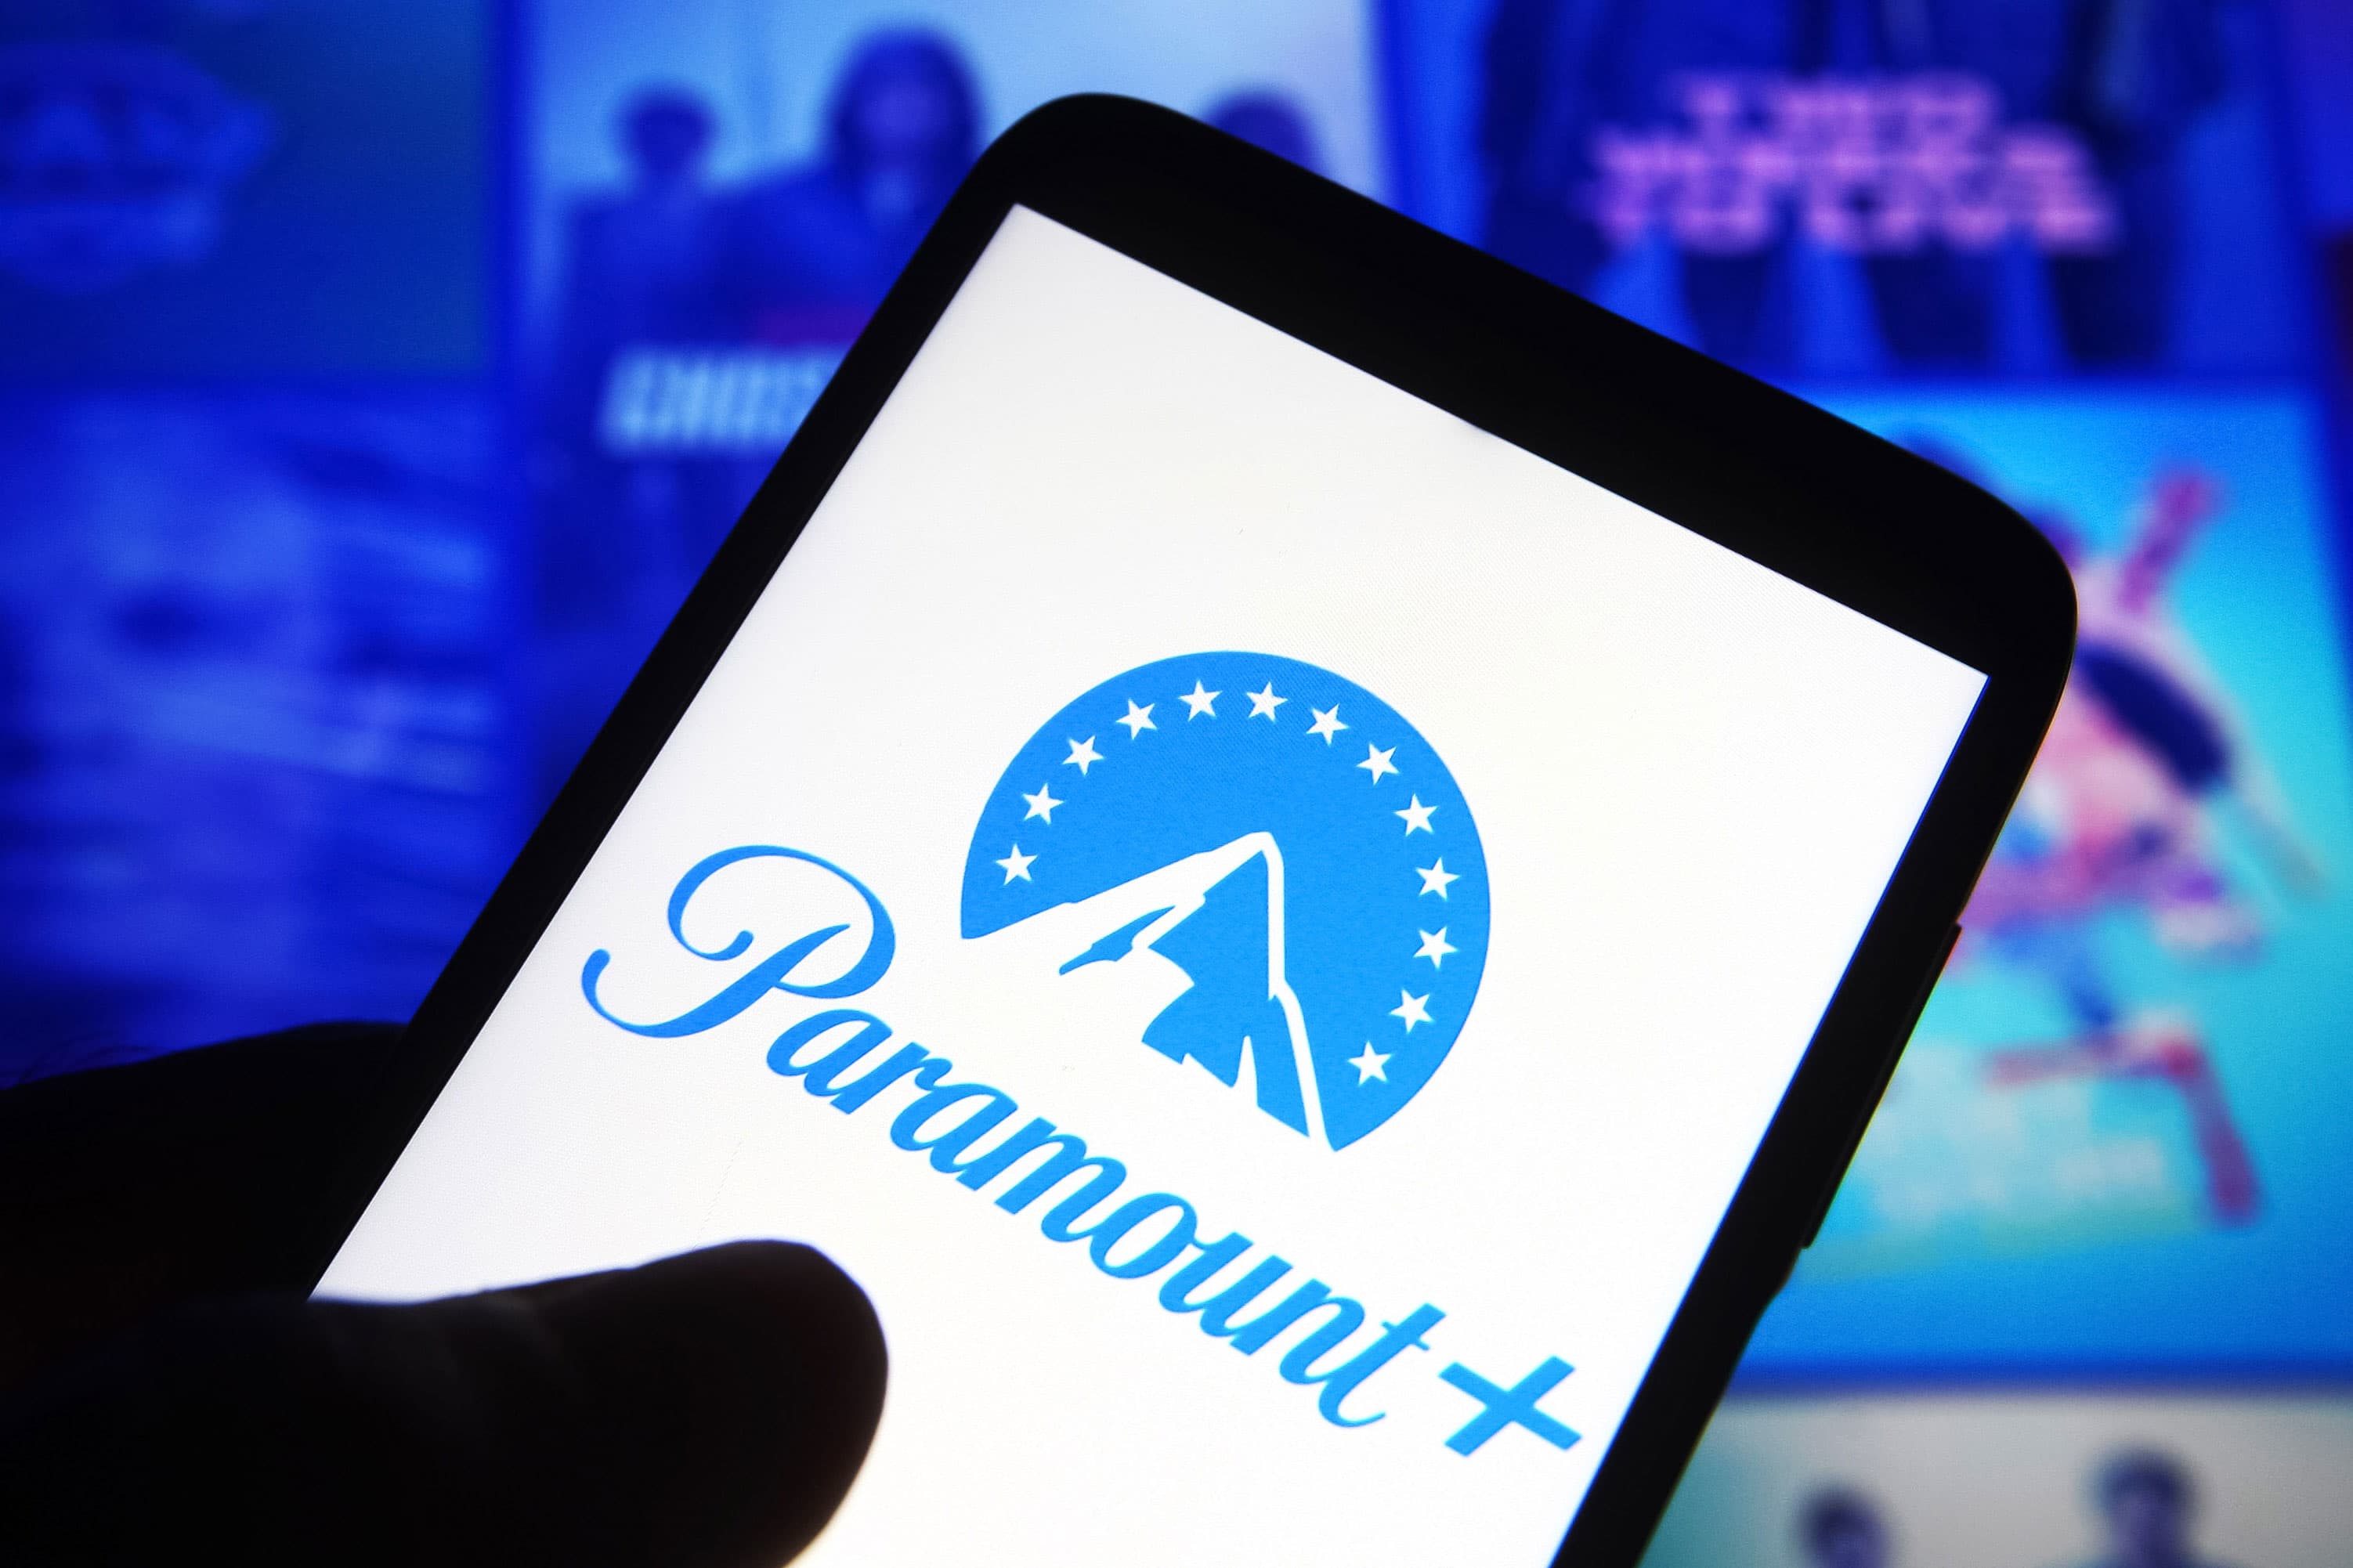 Pertumbuhan pendapatan puncak Paramount kemungkinan terjadi di masa lalu, kata Wells Fargo dalam downgrade